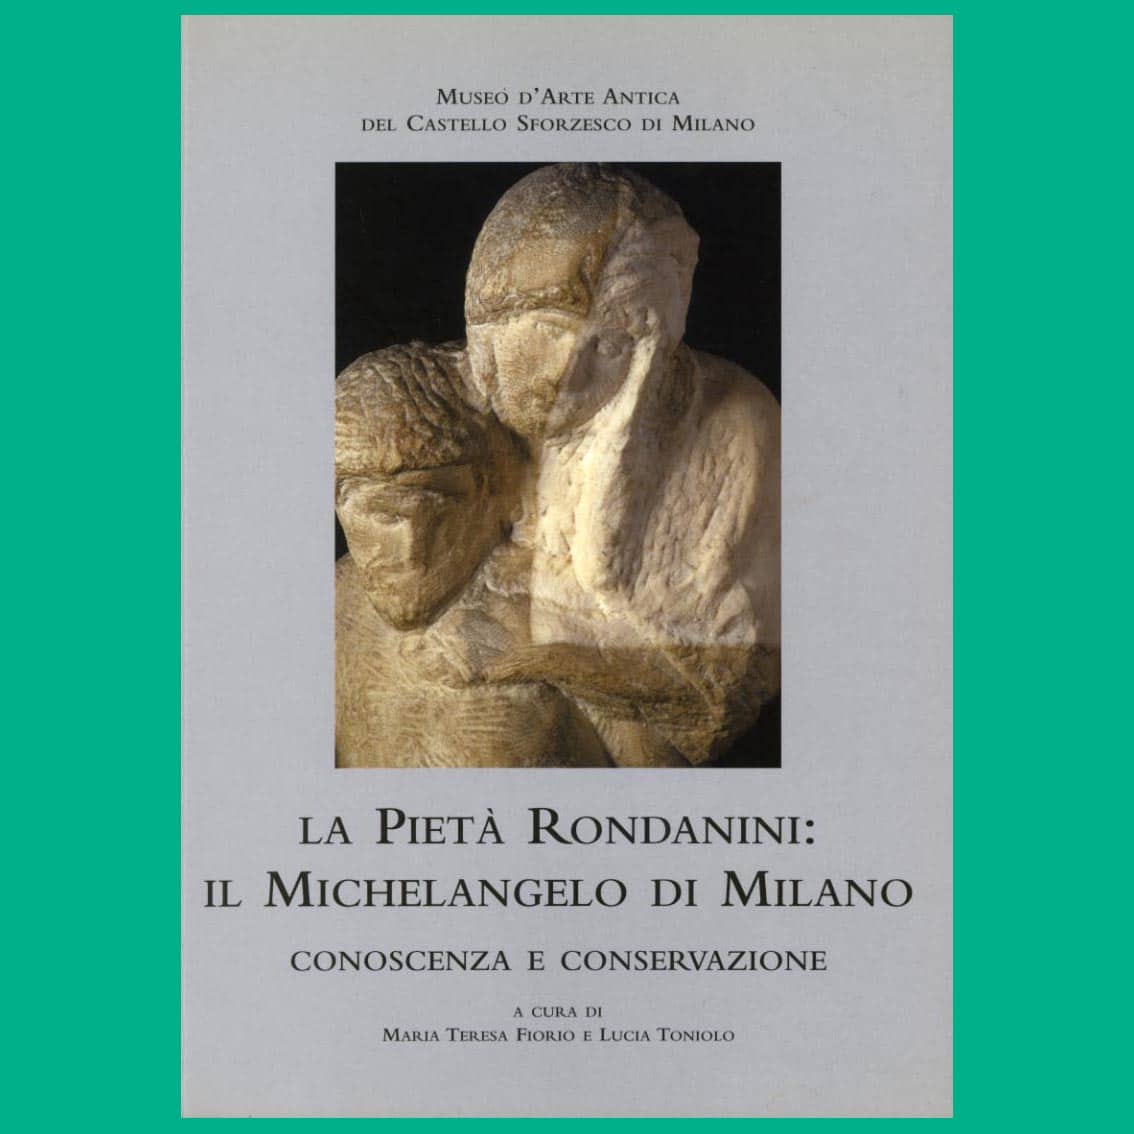 https://cbccoop.it/app/uploads/2017/06/Pietà-Rondanini-Michelangelo-di-Milano.jpg